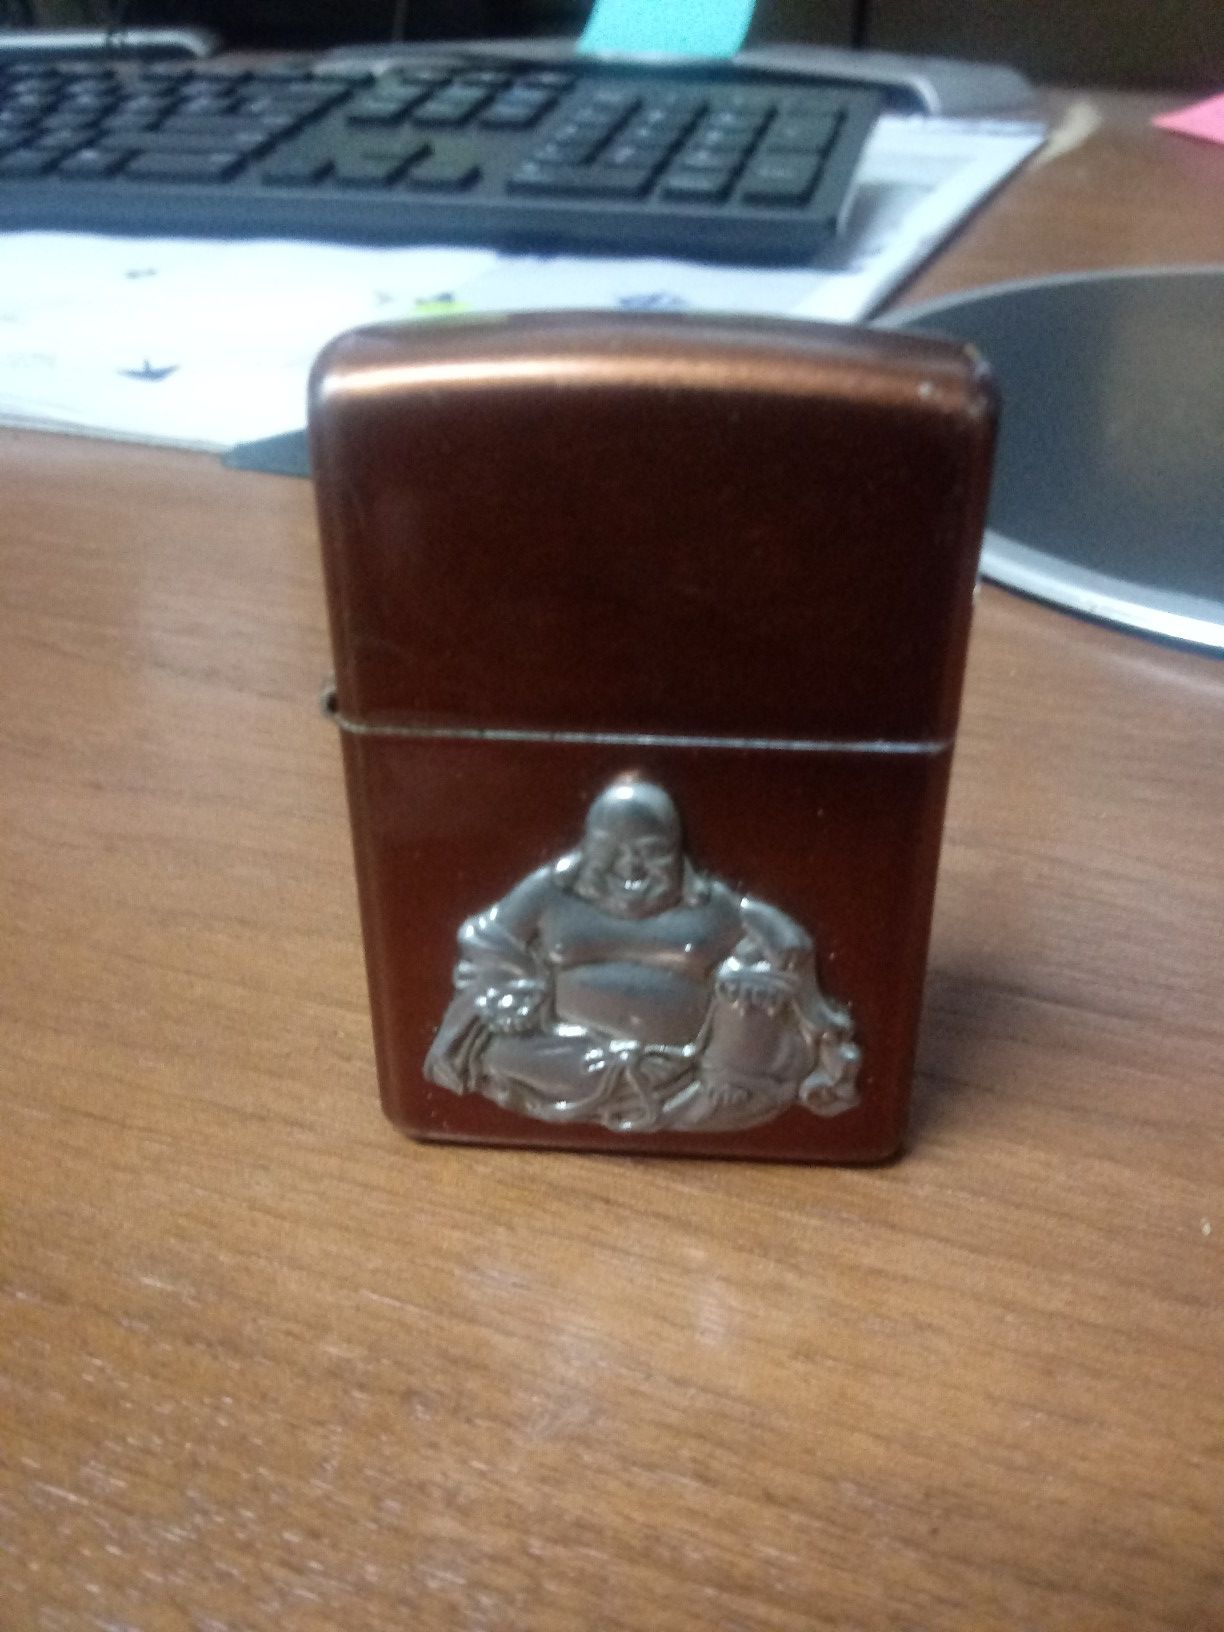 Zippo "Buddha" lighter